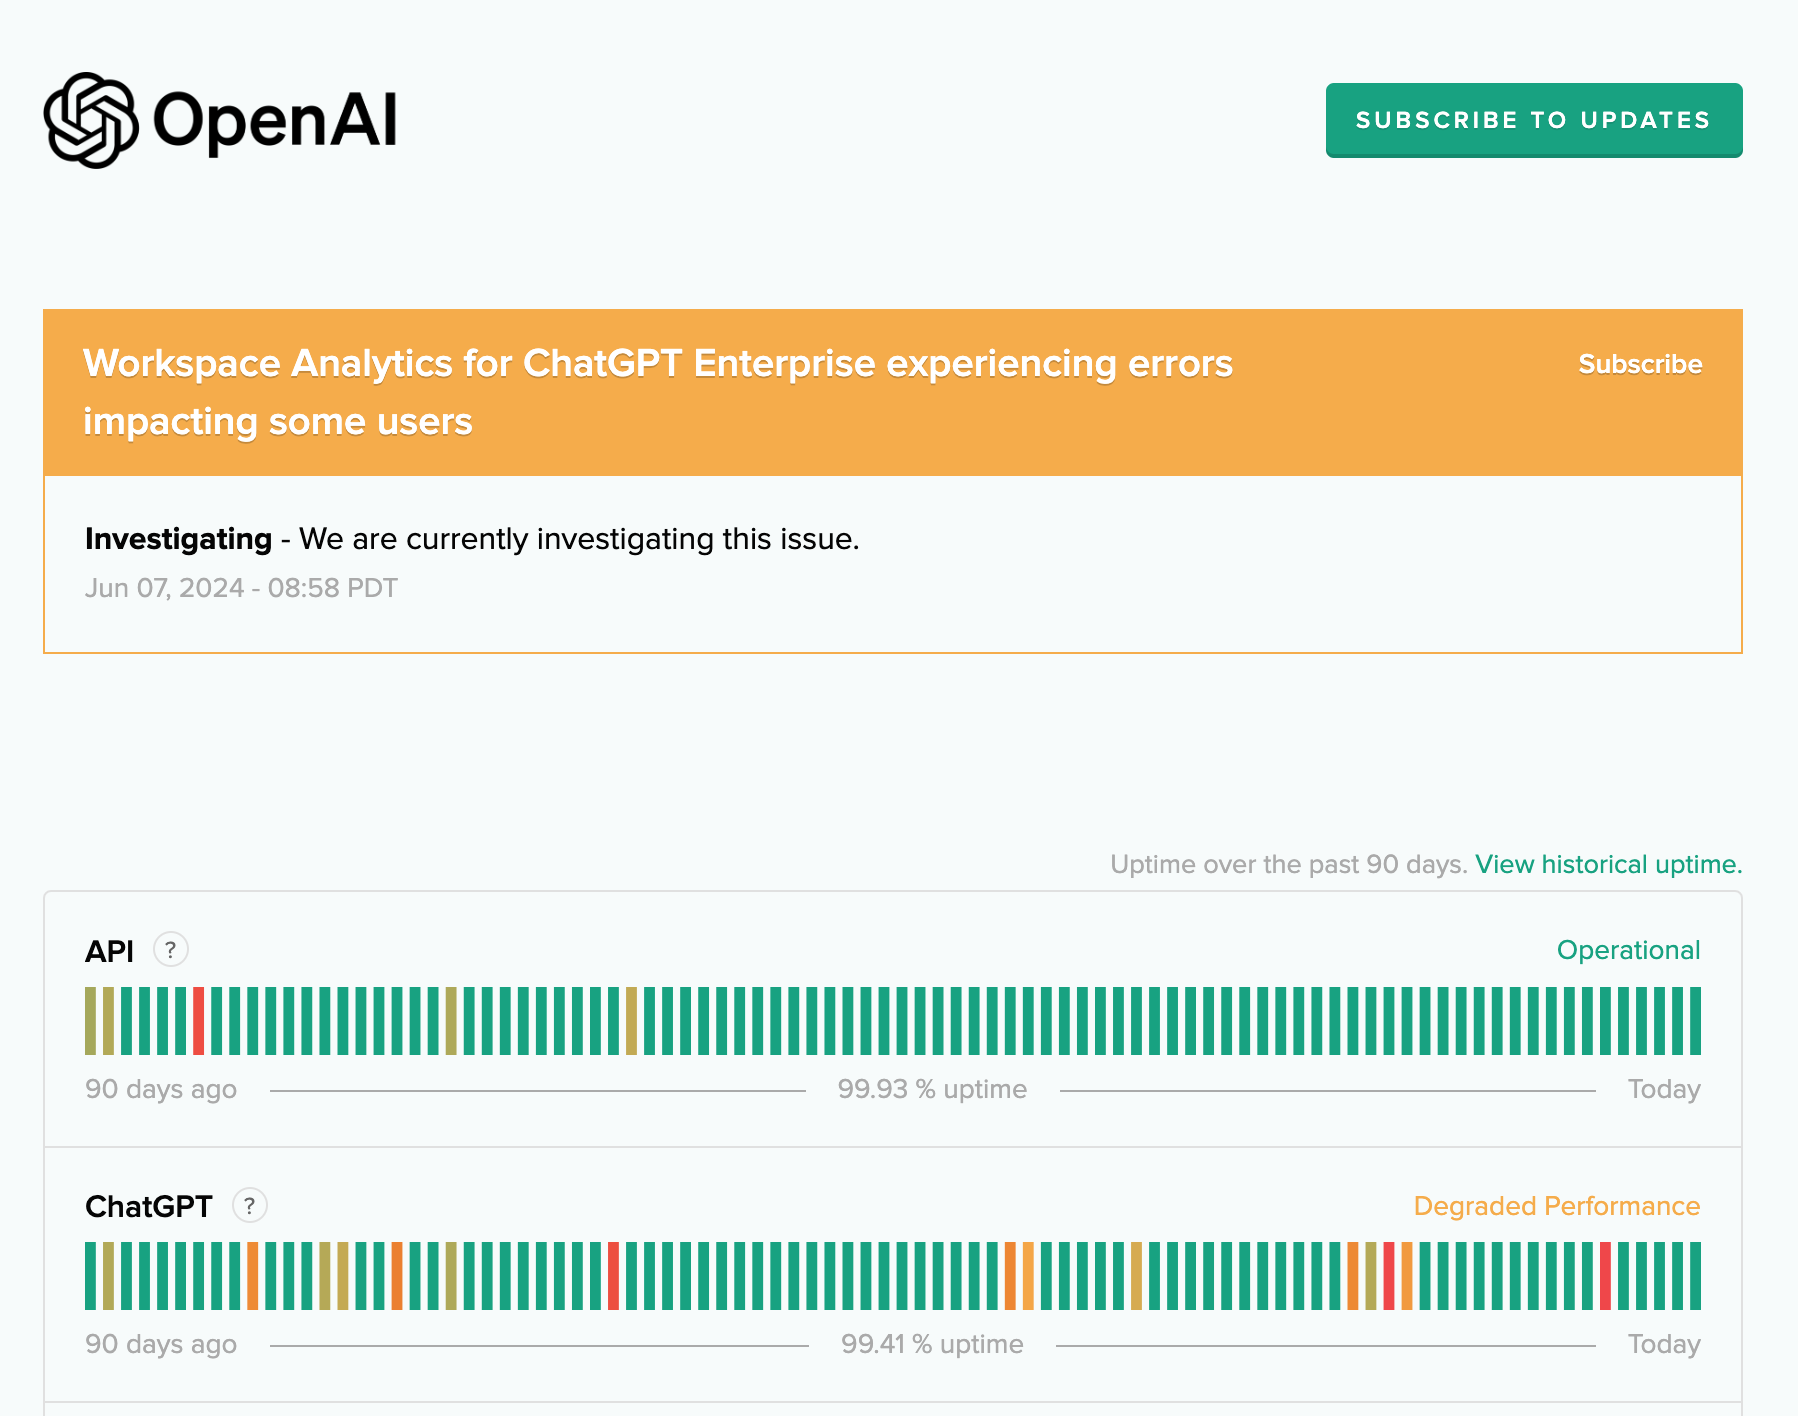 OpenAI status API service availability 90 days